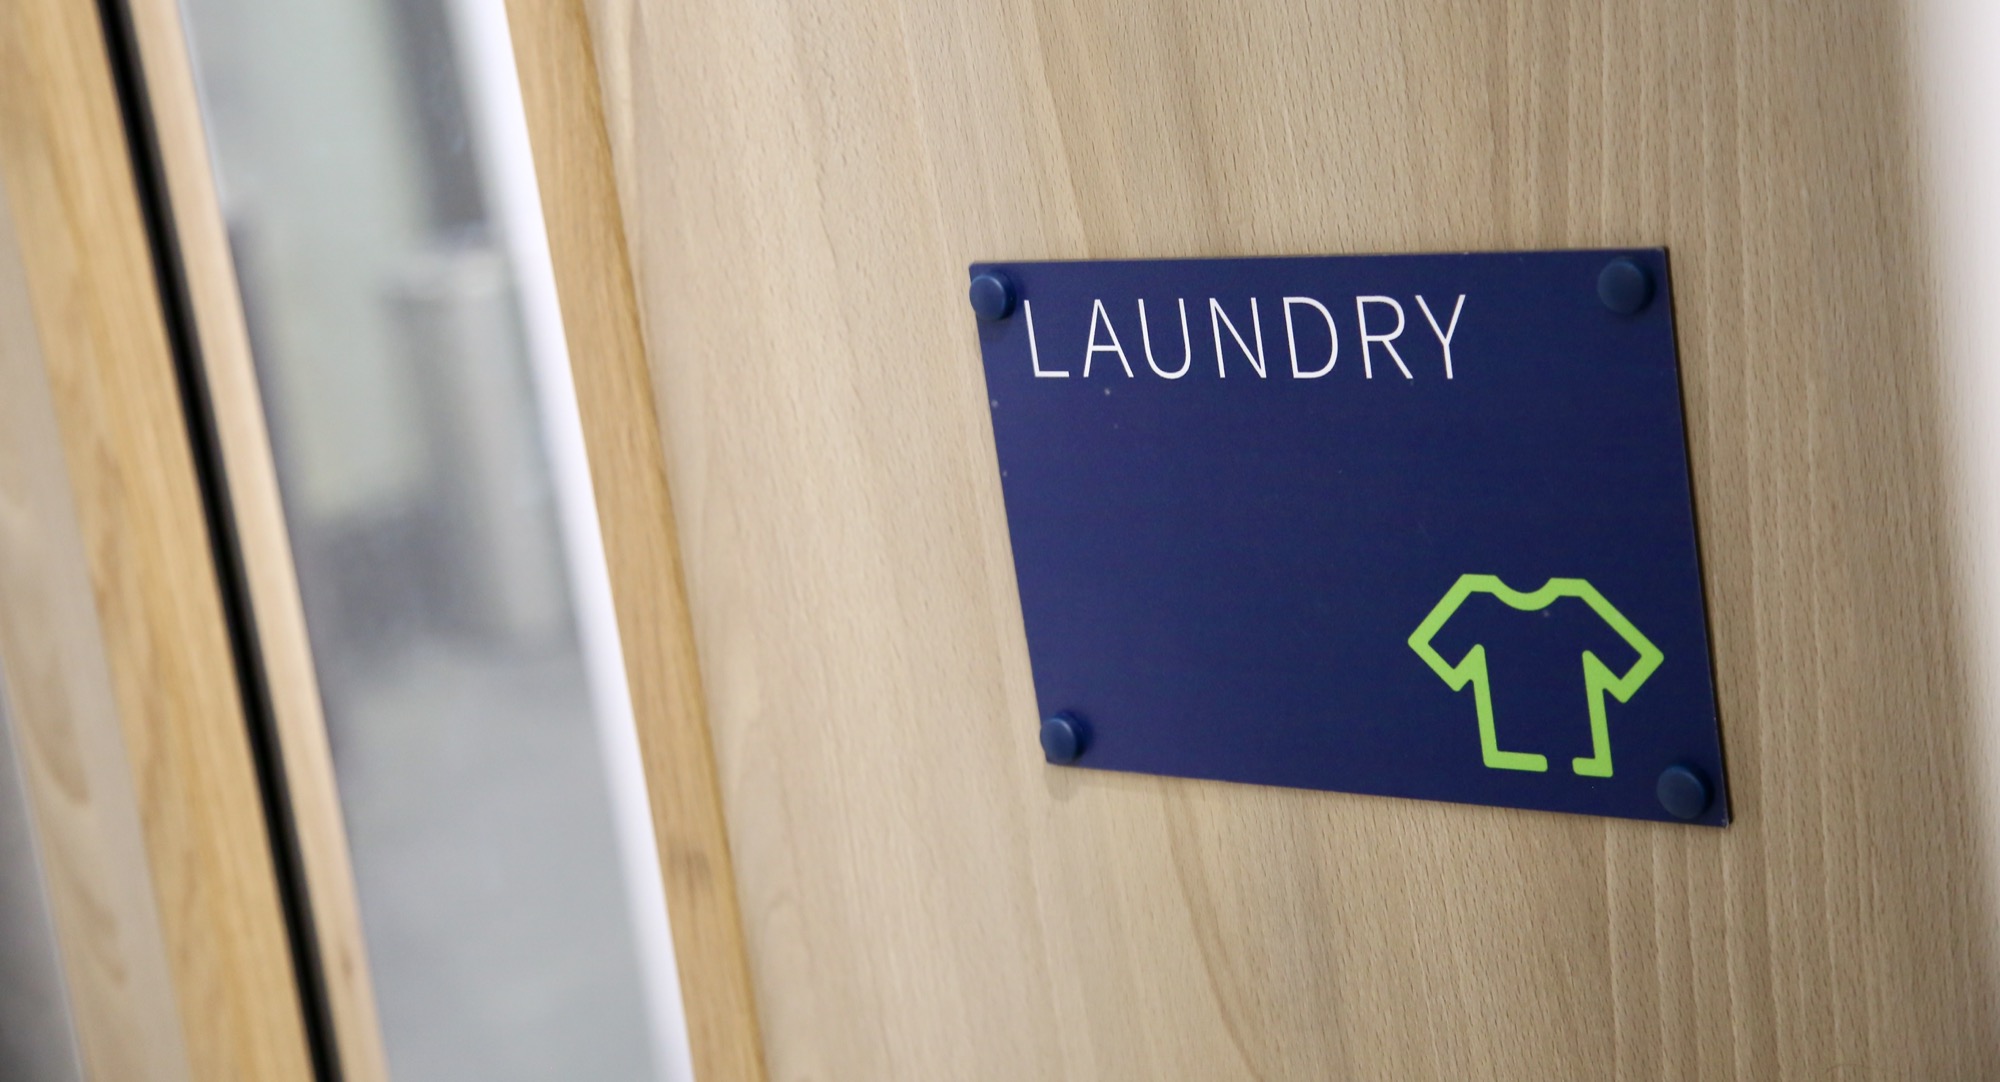 Indoor laundry signage